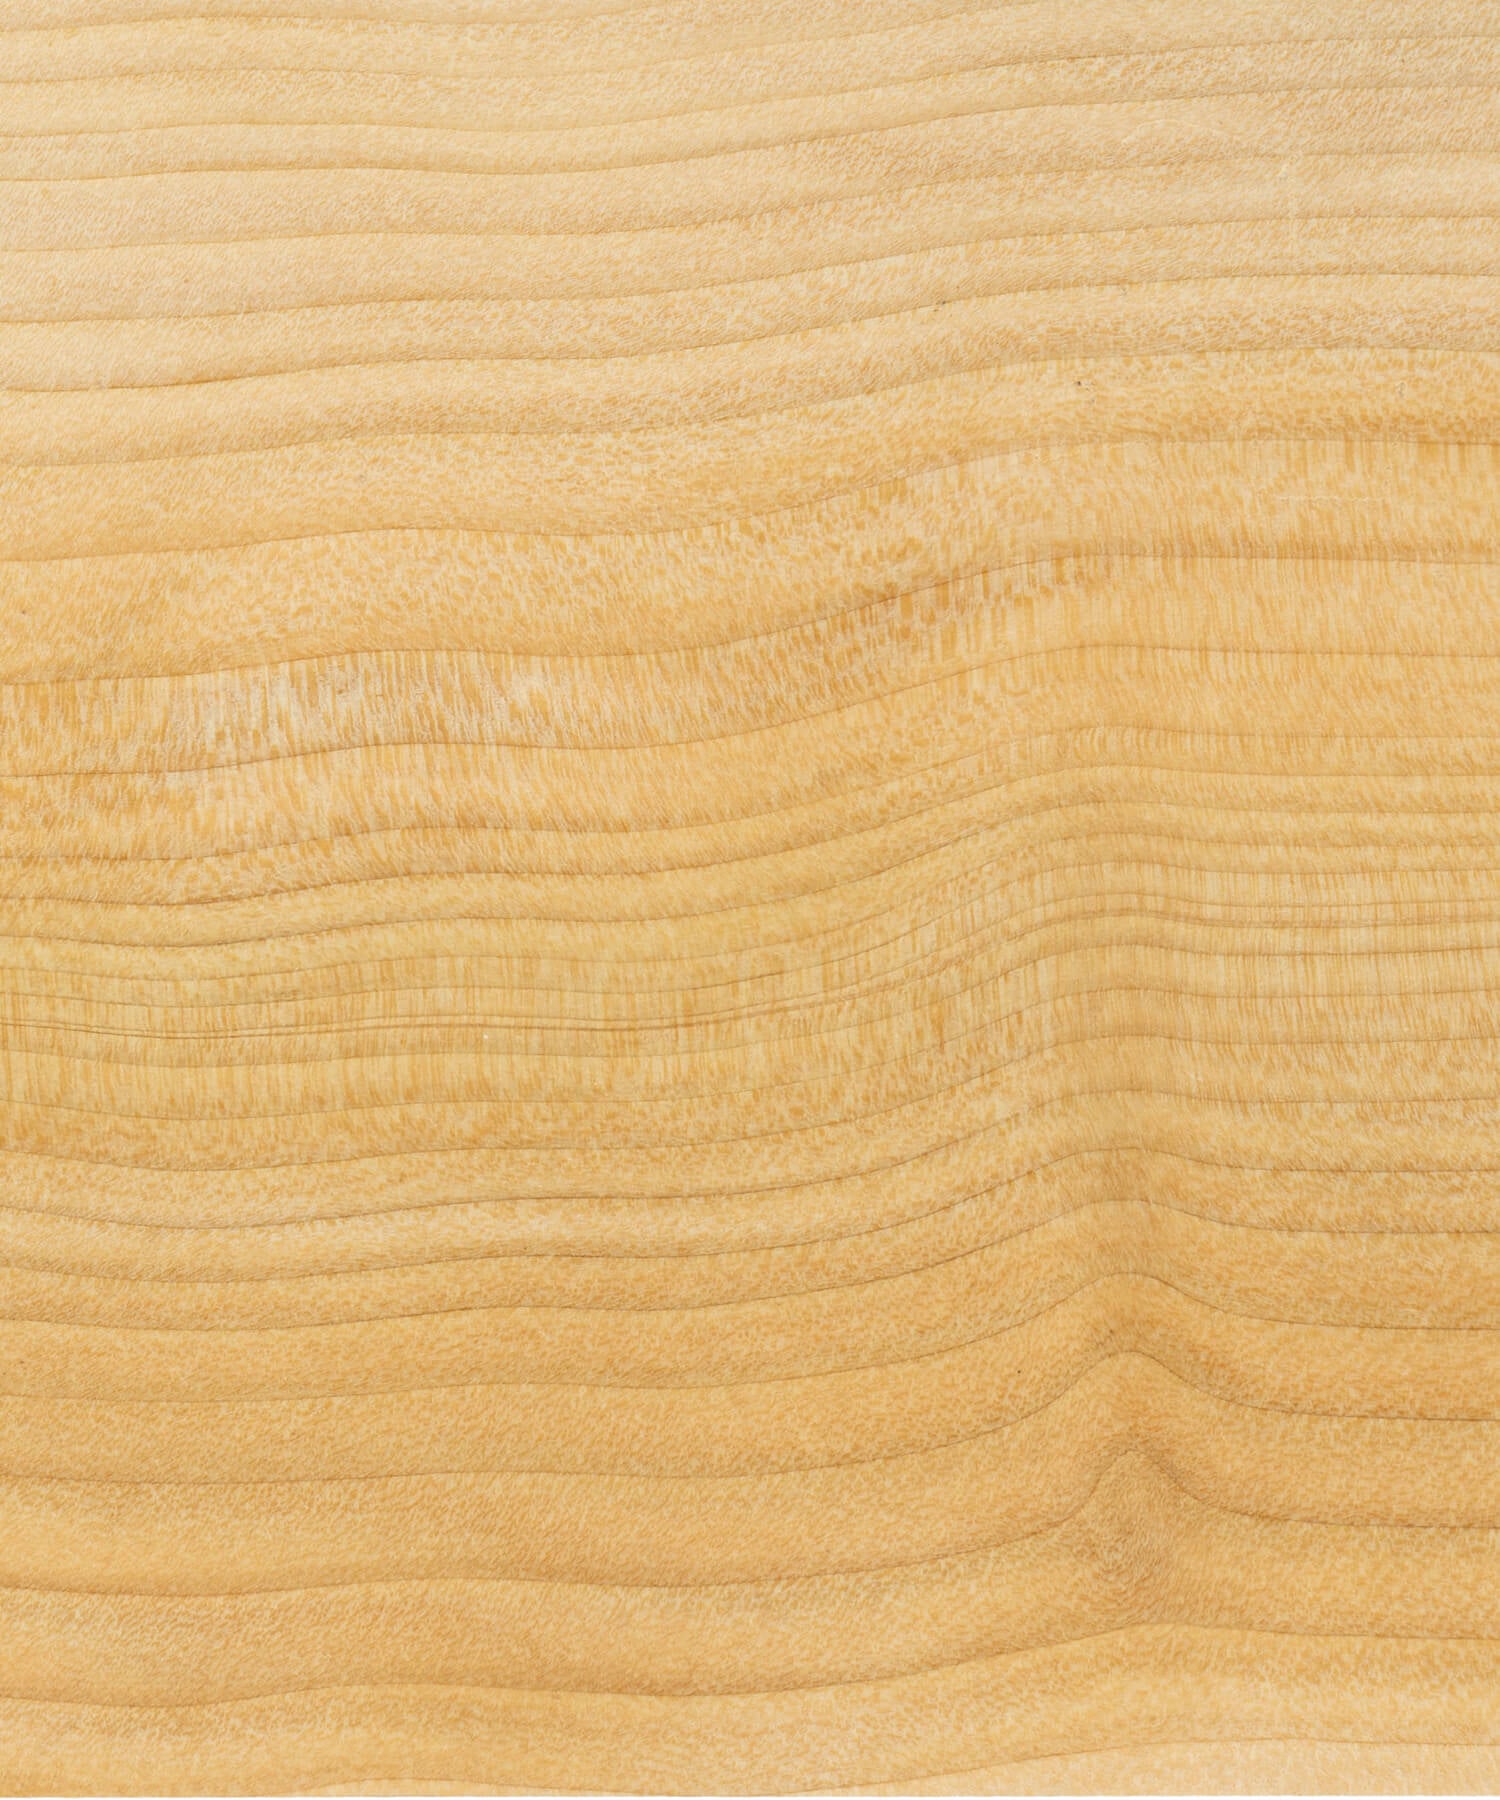 Oiled cedar of Lebanon timber grain close up